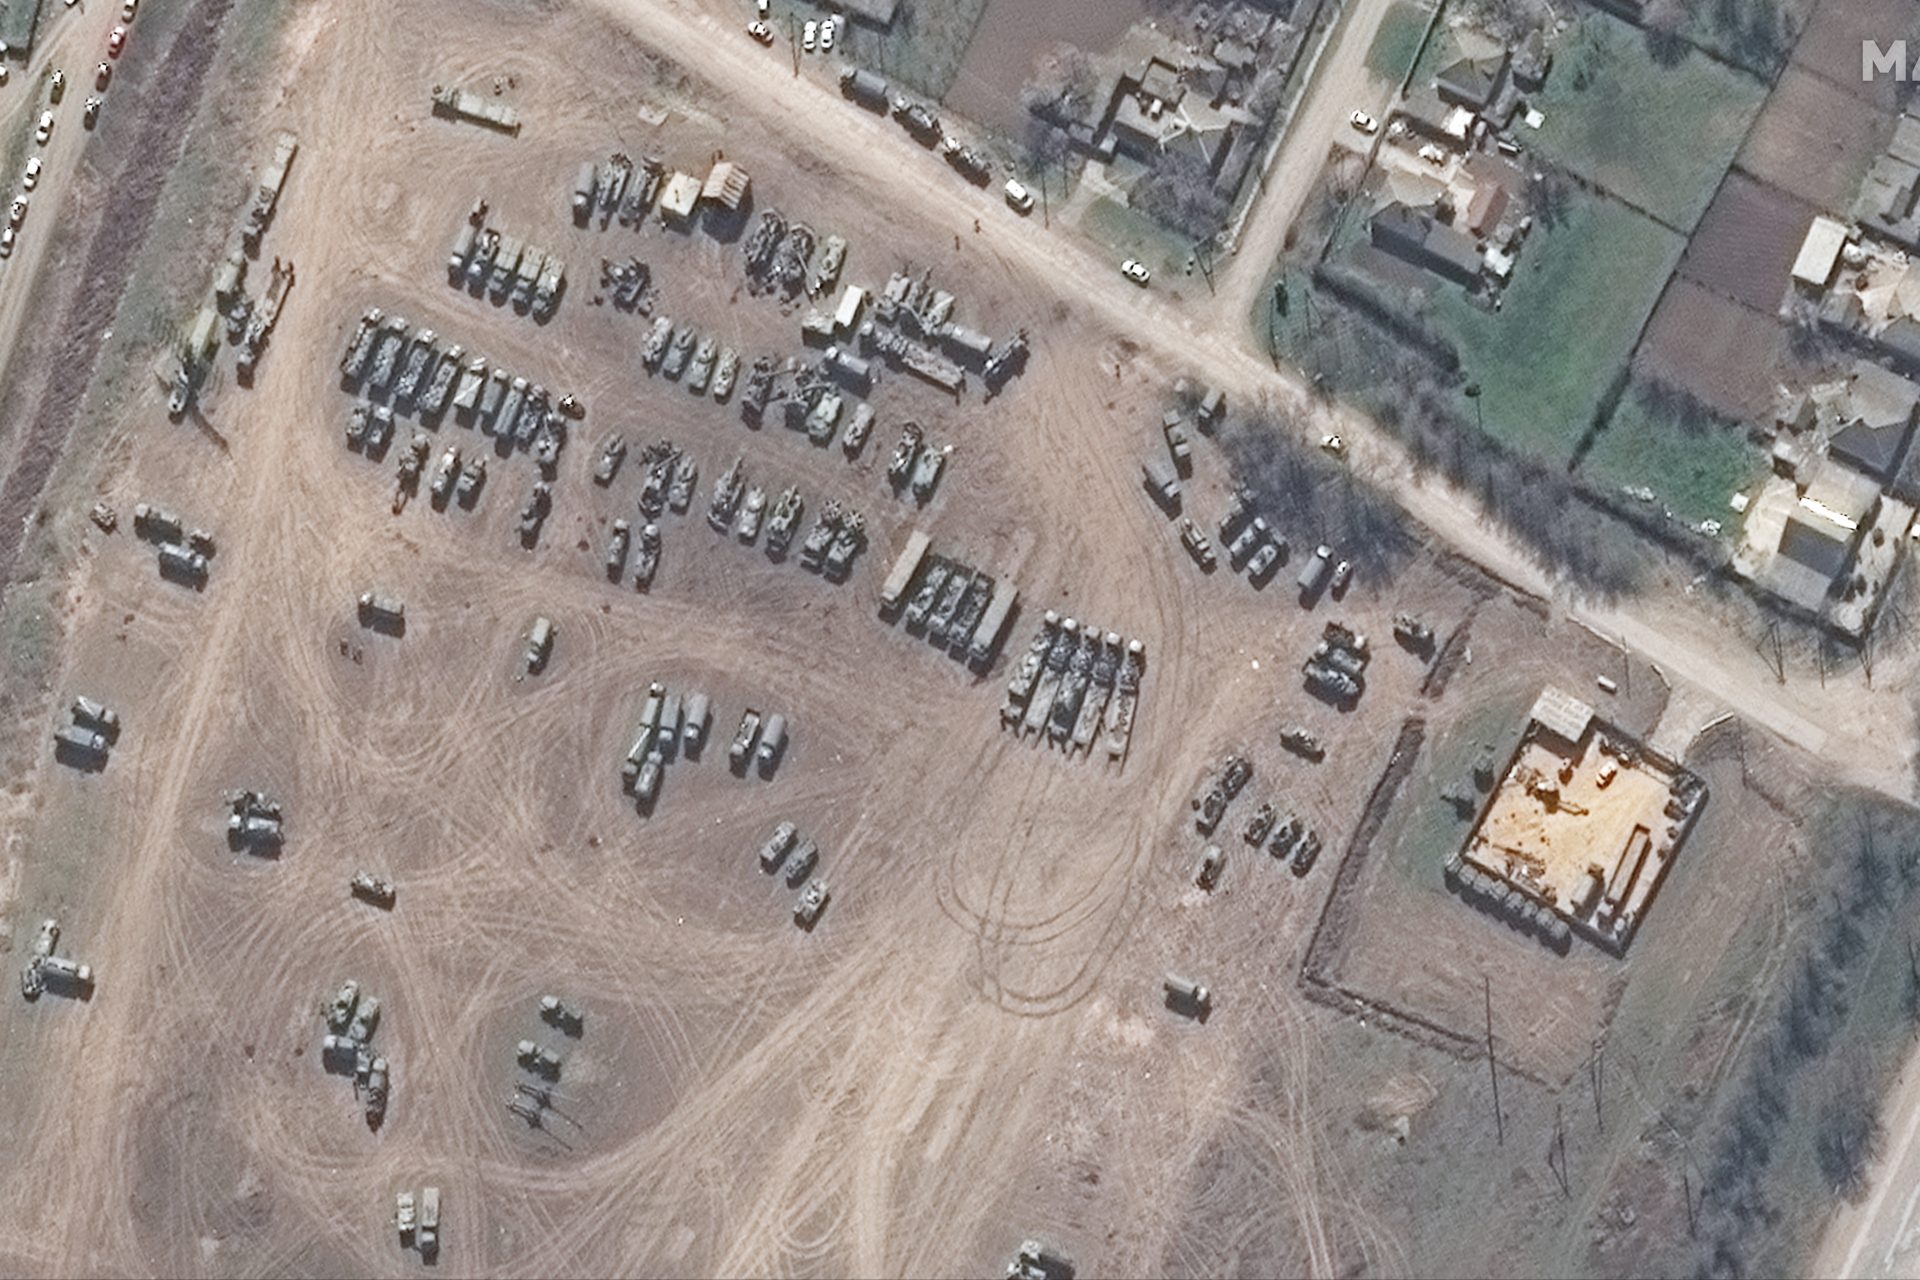 Russia's mistakes at Dzhankoi Airbase